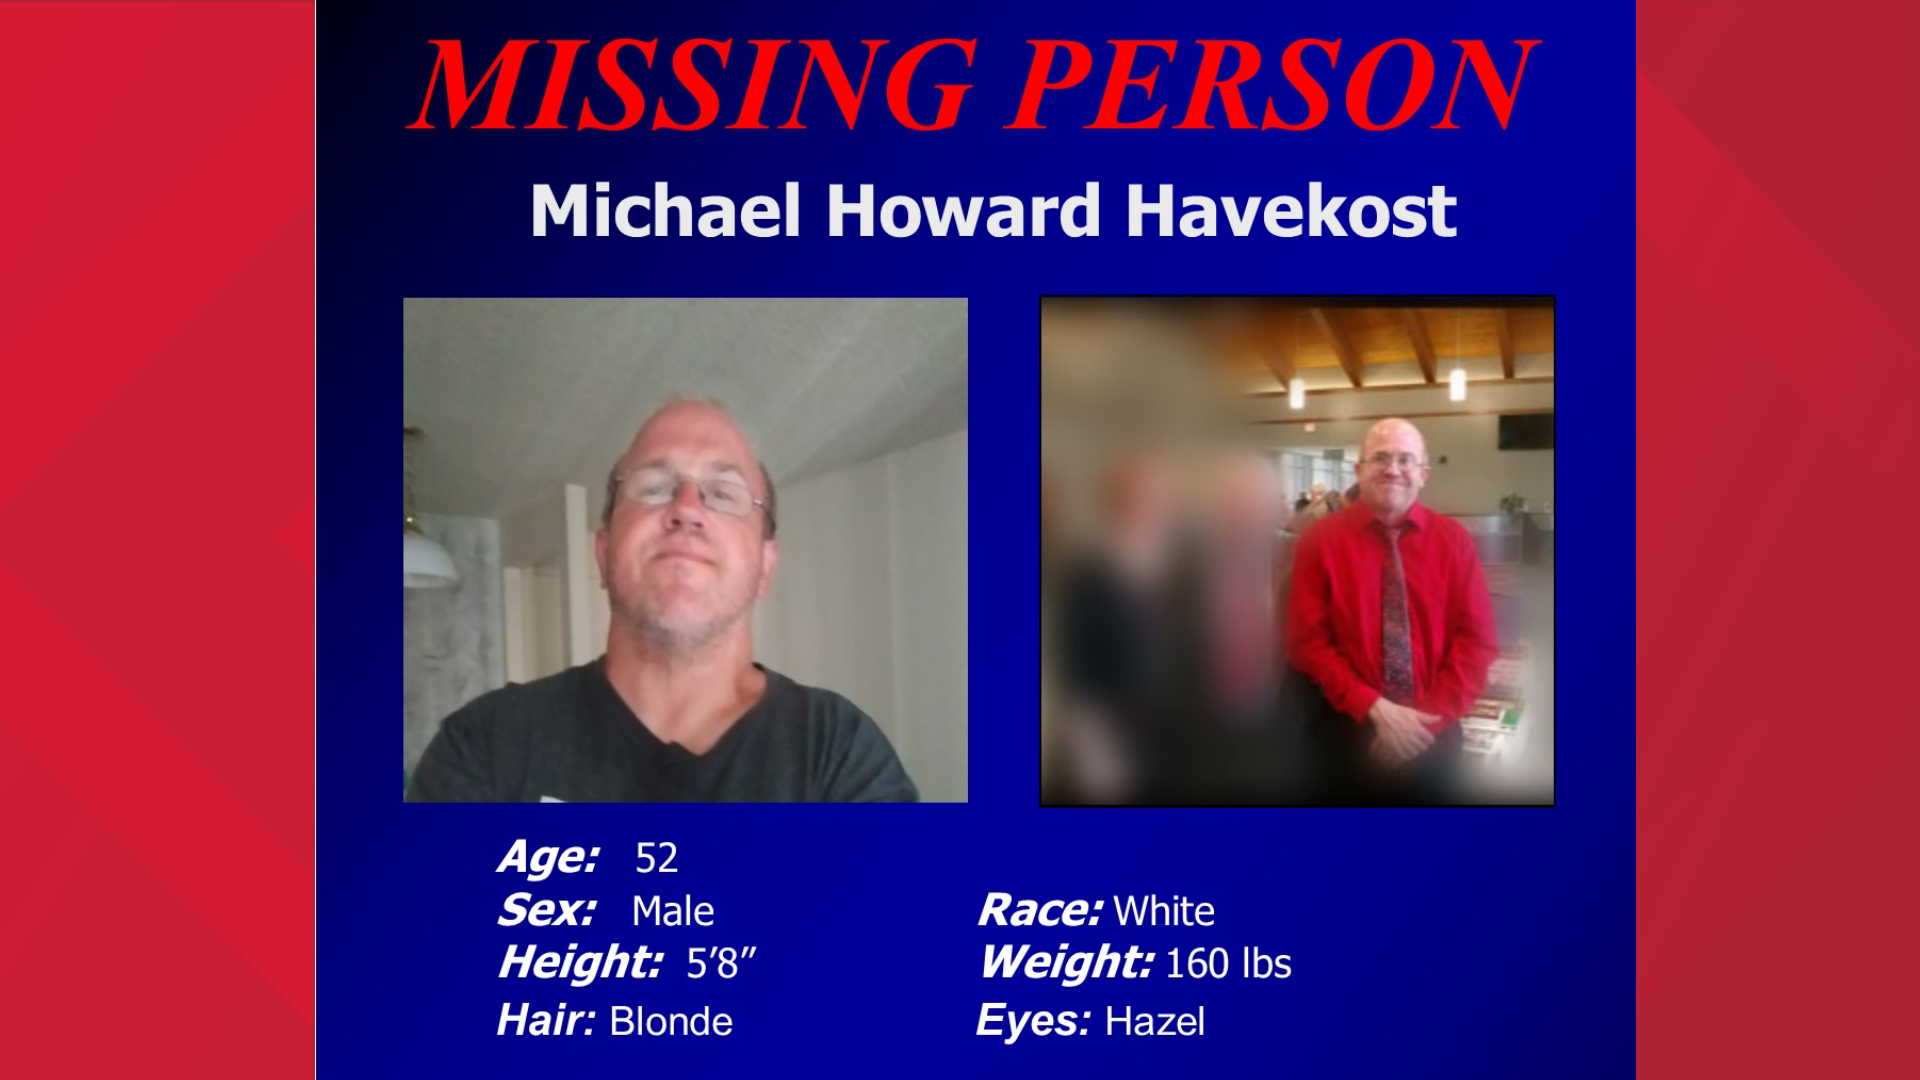 Police said Michael Havekost was last seen Sept. 4.